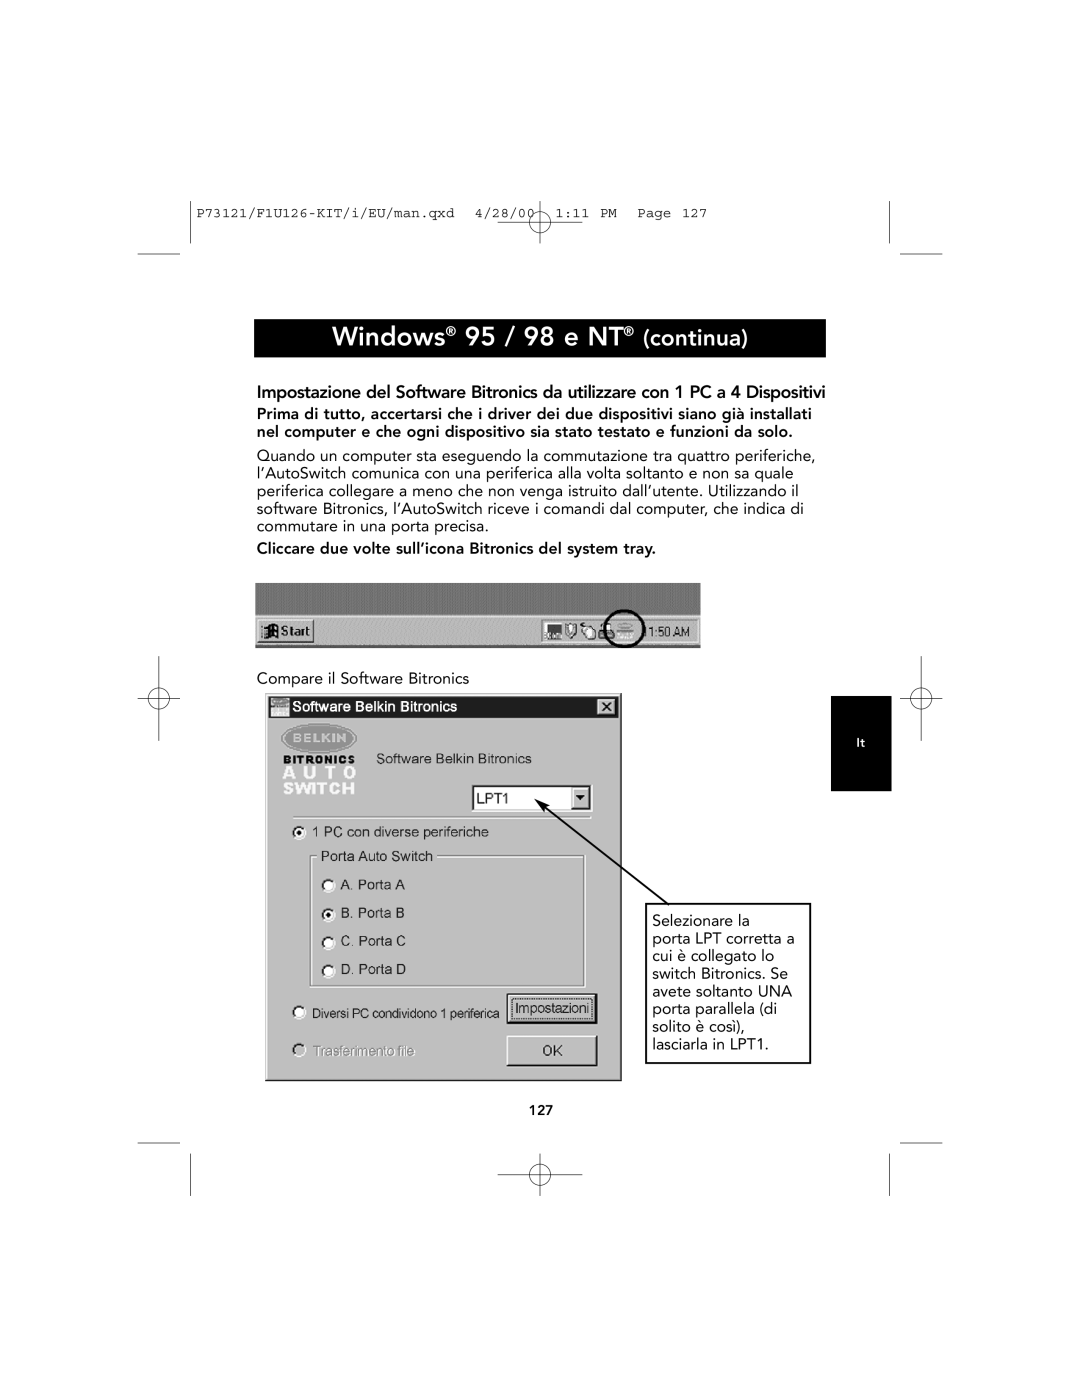 Belkin F1U126-KIT, P73121 user manual Windows 95 / 98 e NT continua 